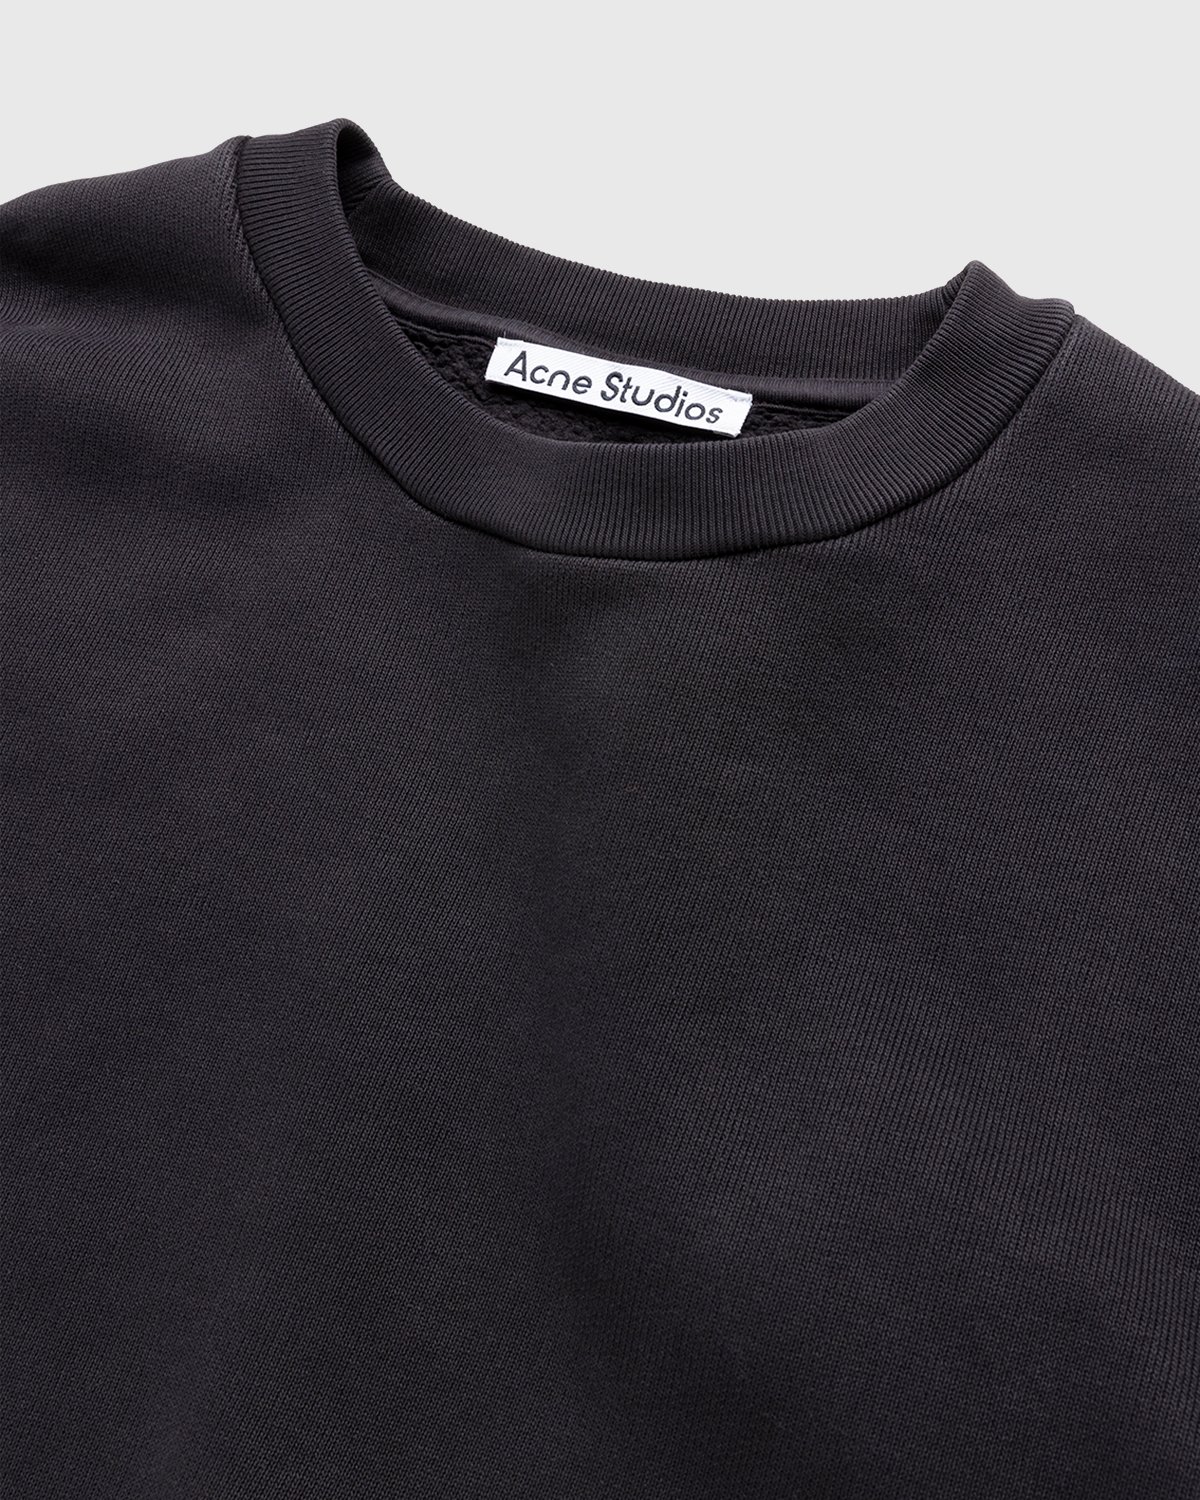 Acne Studios - Logo Sweatshirt Black - Clothing - Black - Image 4